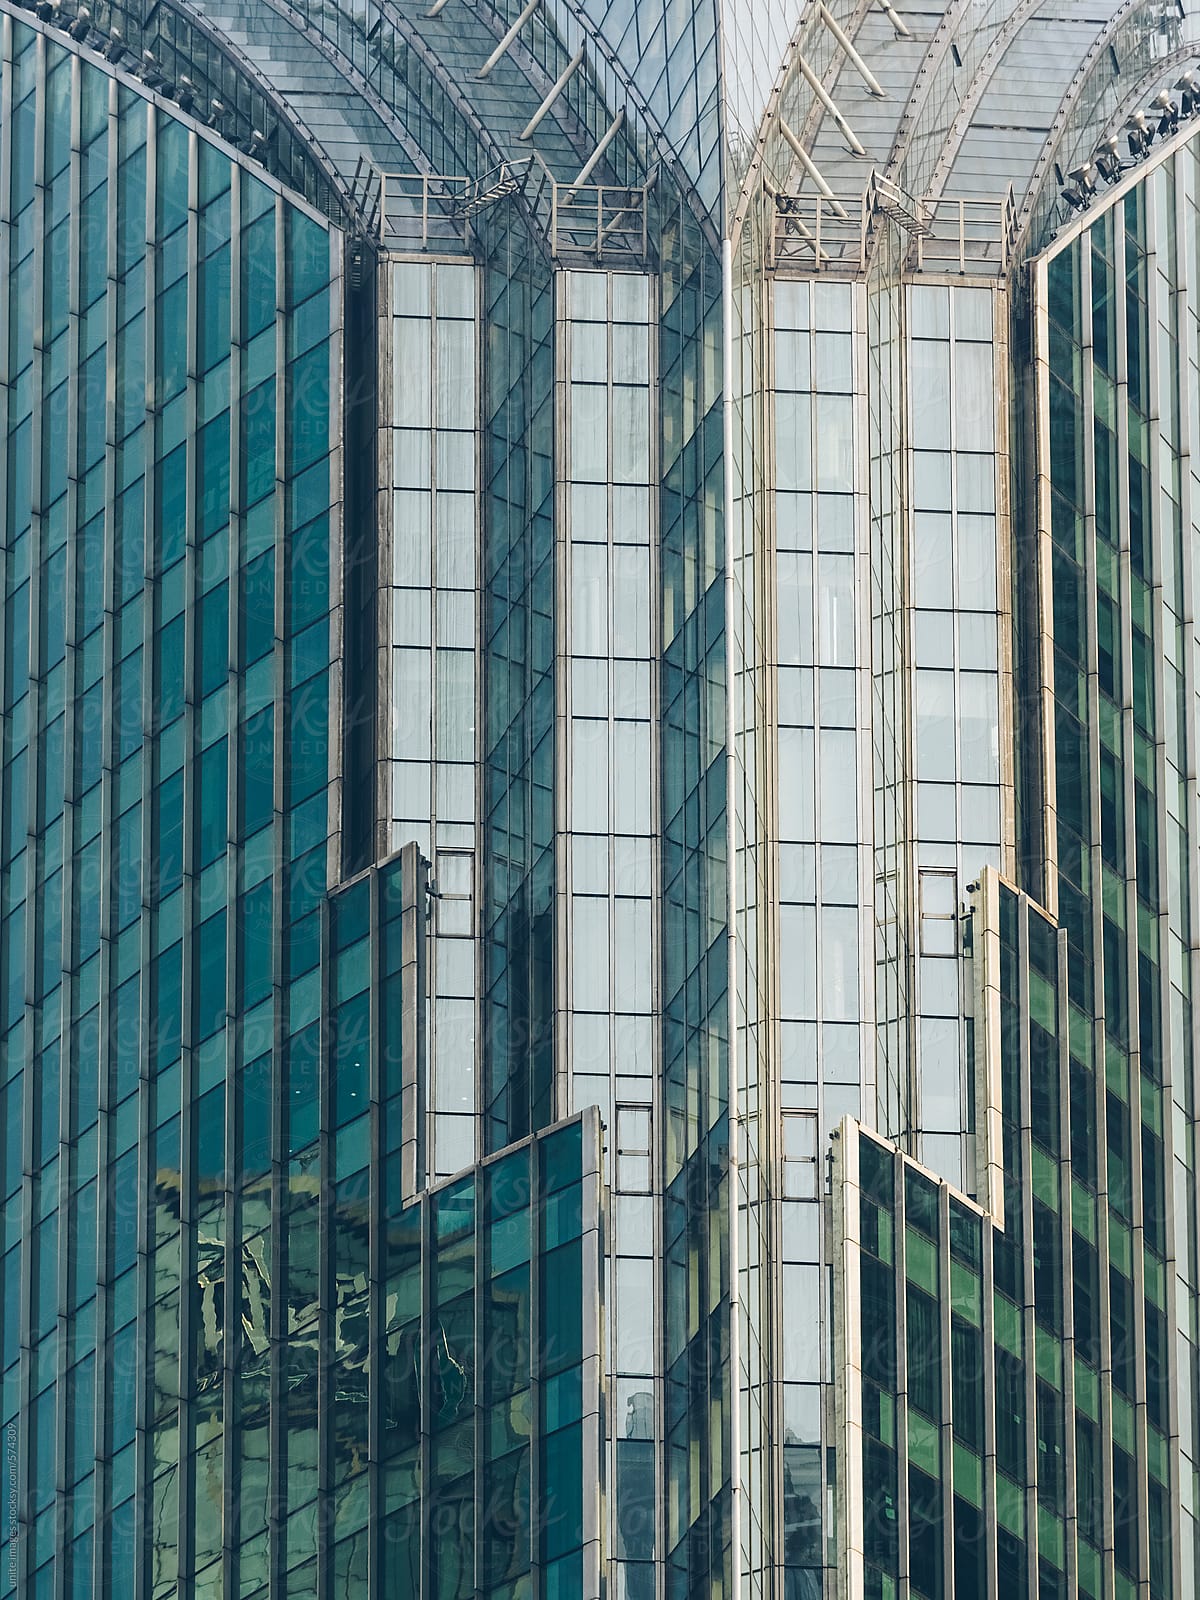 window of office building